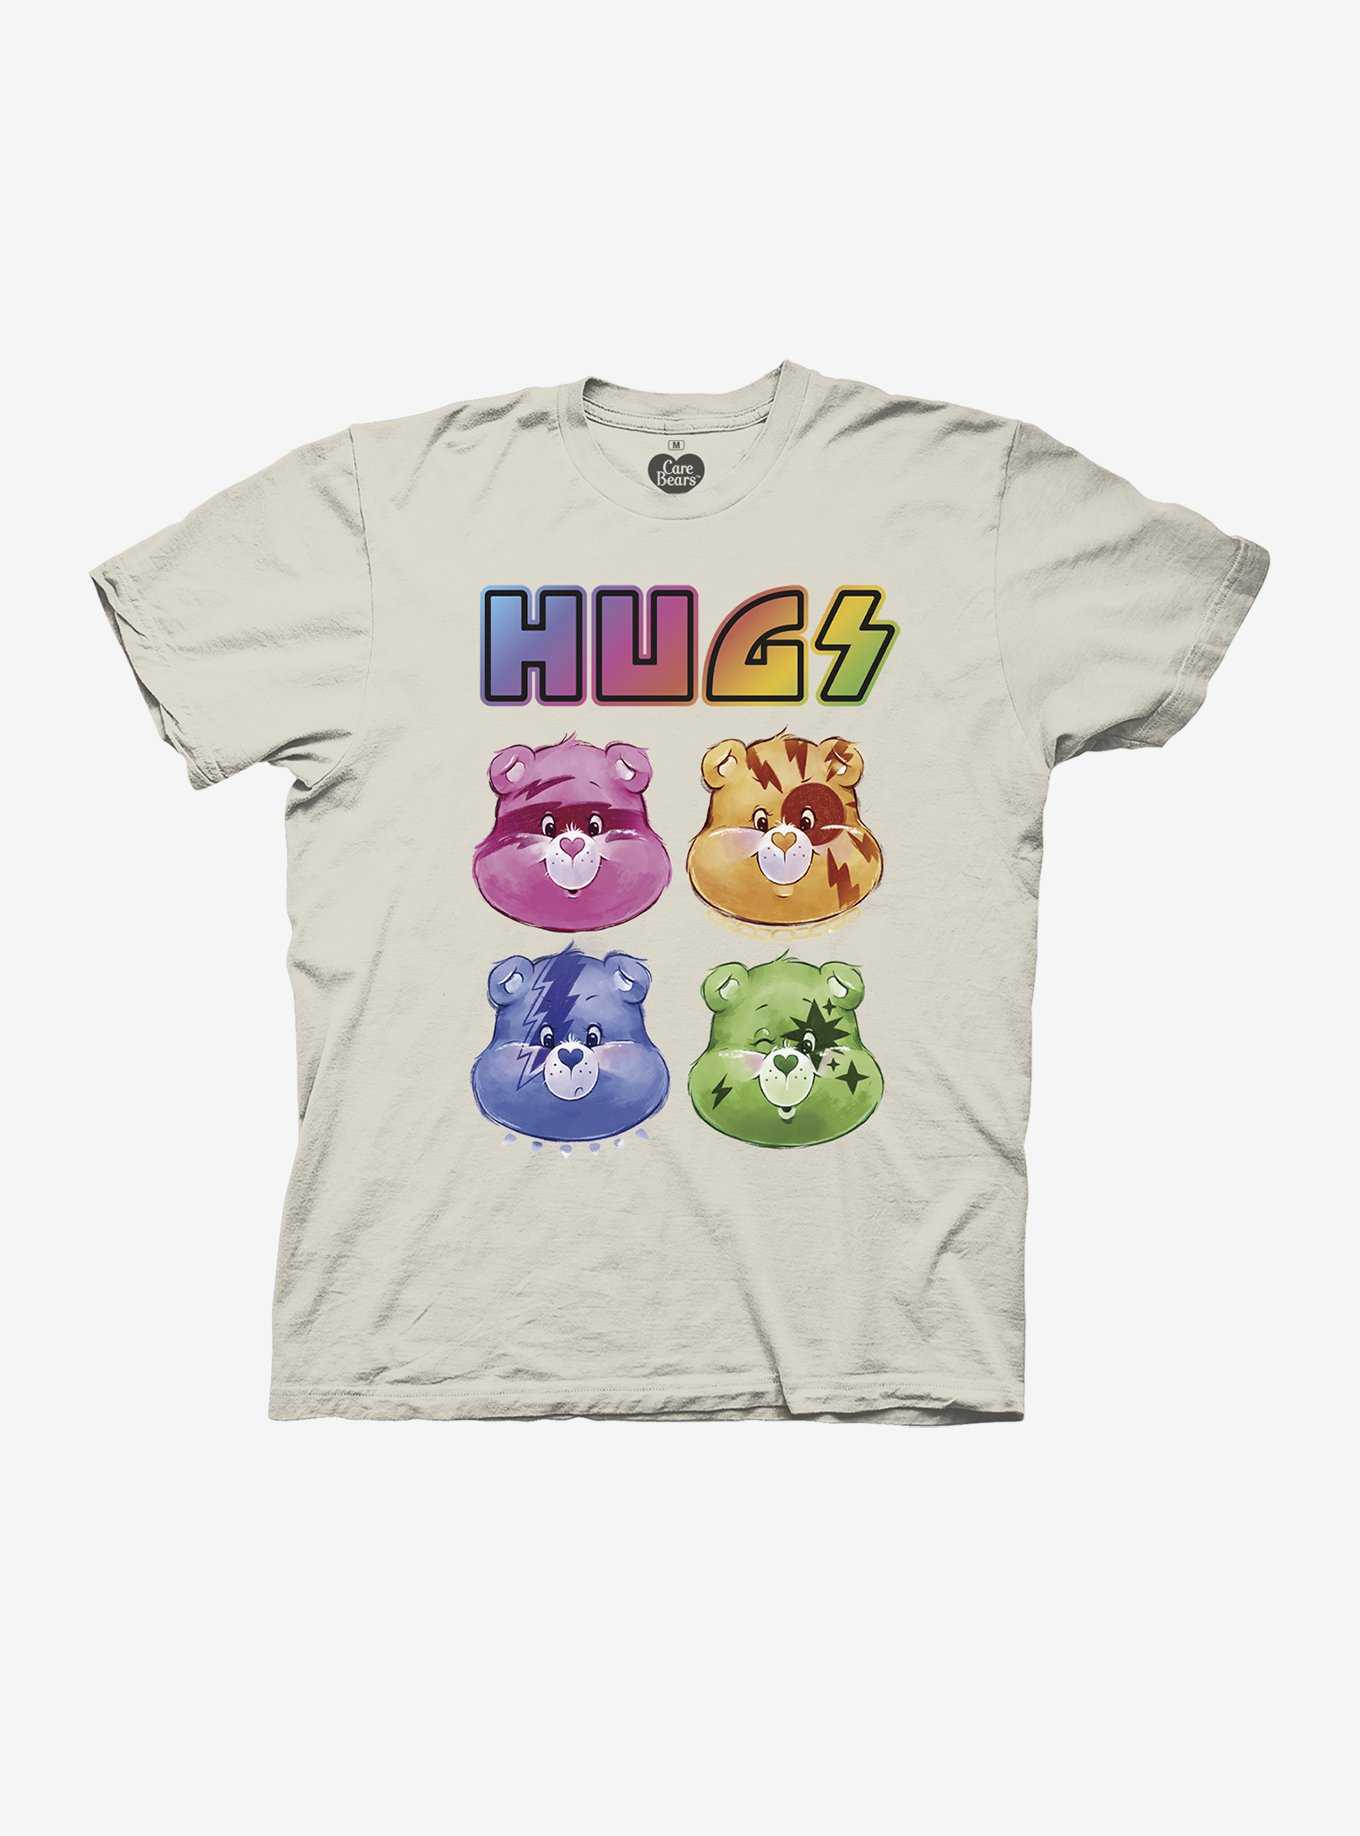 Care Bears Hugs Band Boyfriend Fit Girls T-Shirt, , hi-res